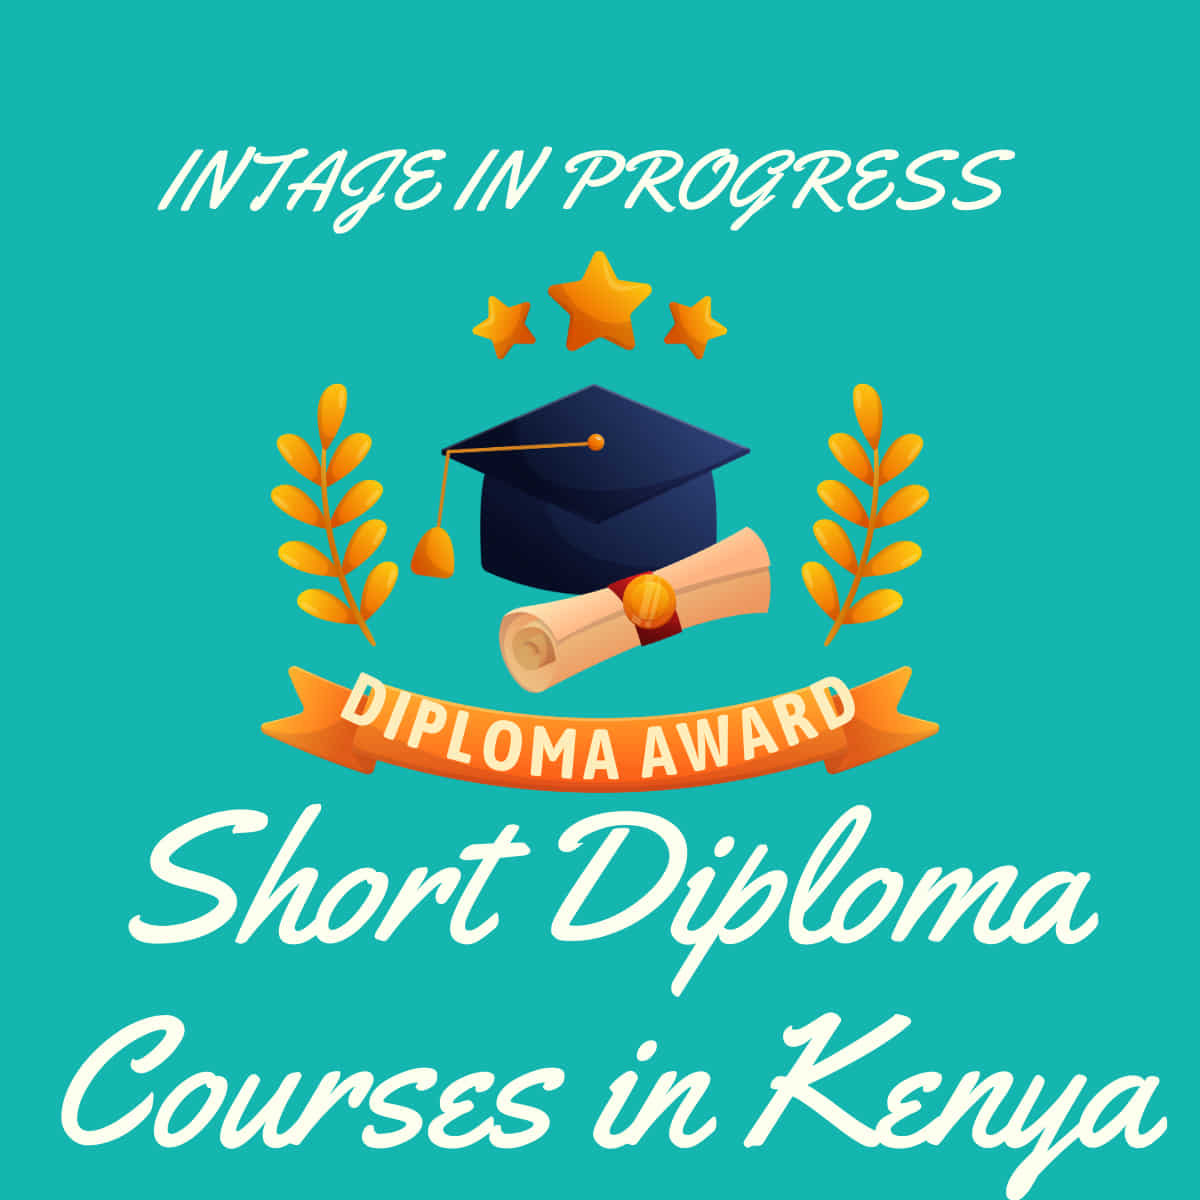 Short diploma courses in Kenya